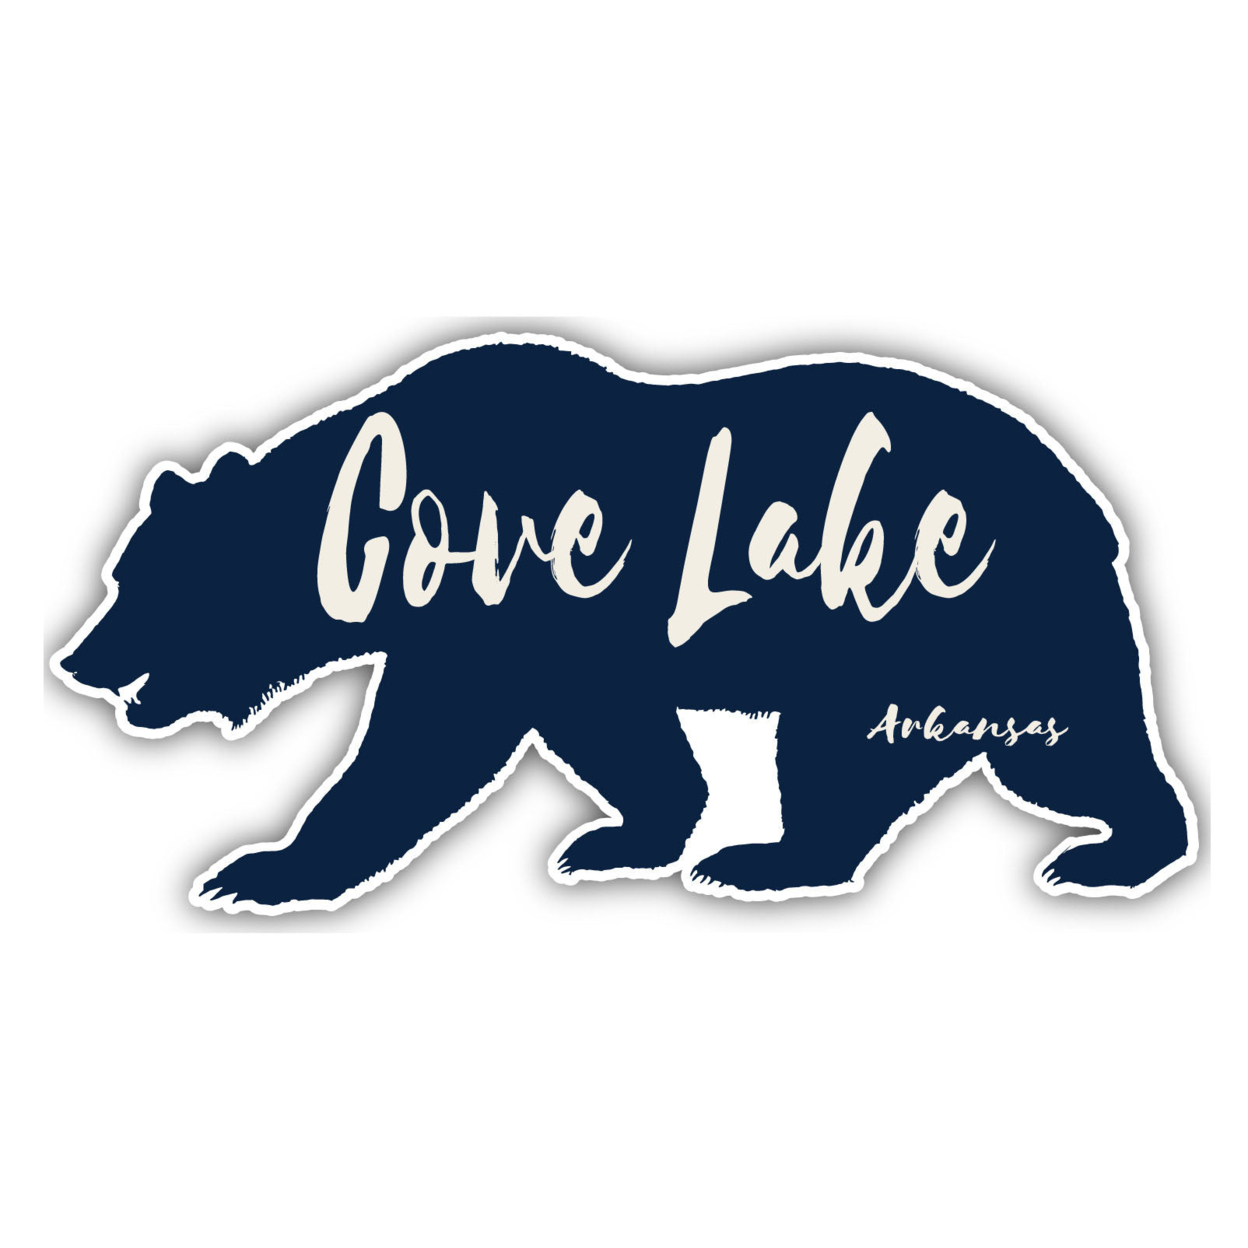 Cove Lake Arkansas Souvenir Decorative Stickers (Choose Theme And Size) - Single Unit, 12-Inch, Bear